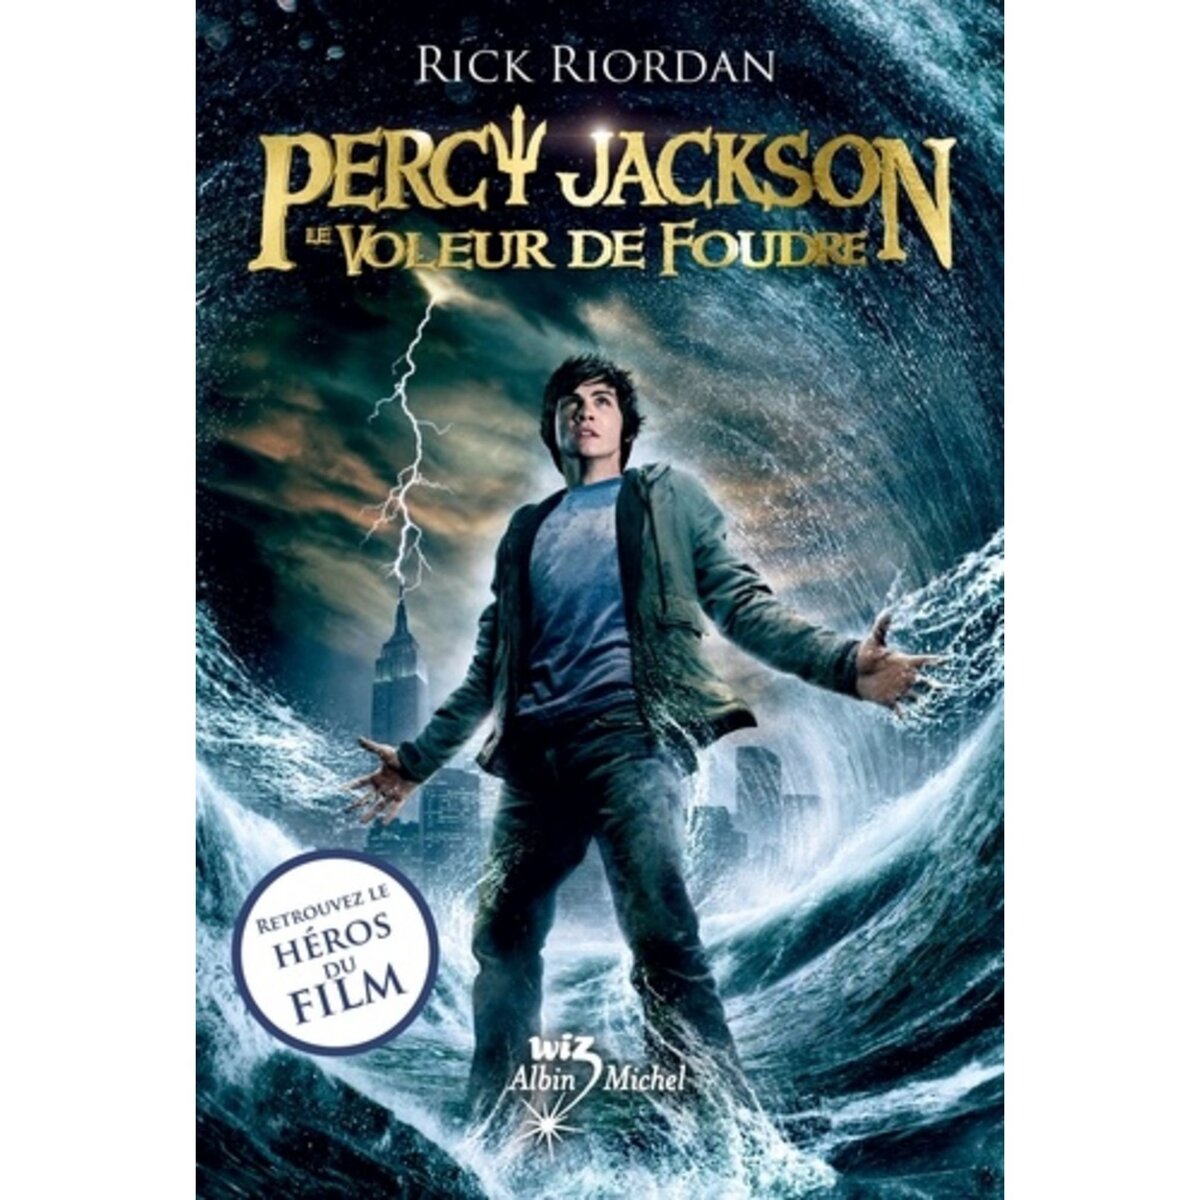  PERCY JACKSON TOME 1 : LE VOLEUR DE FOUDRE, Riordan Rick